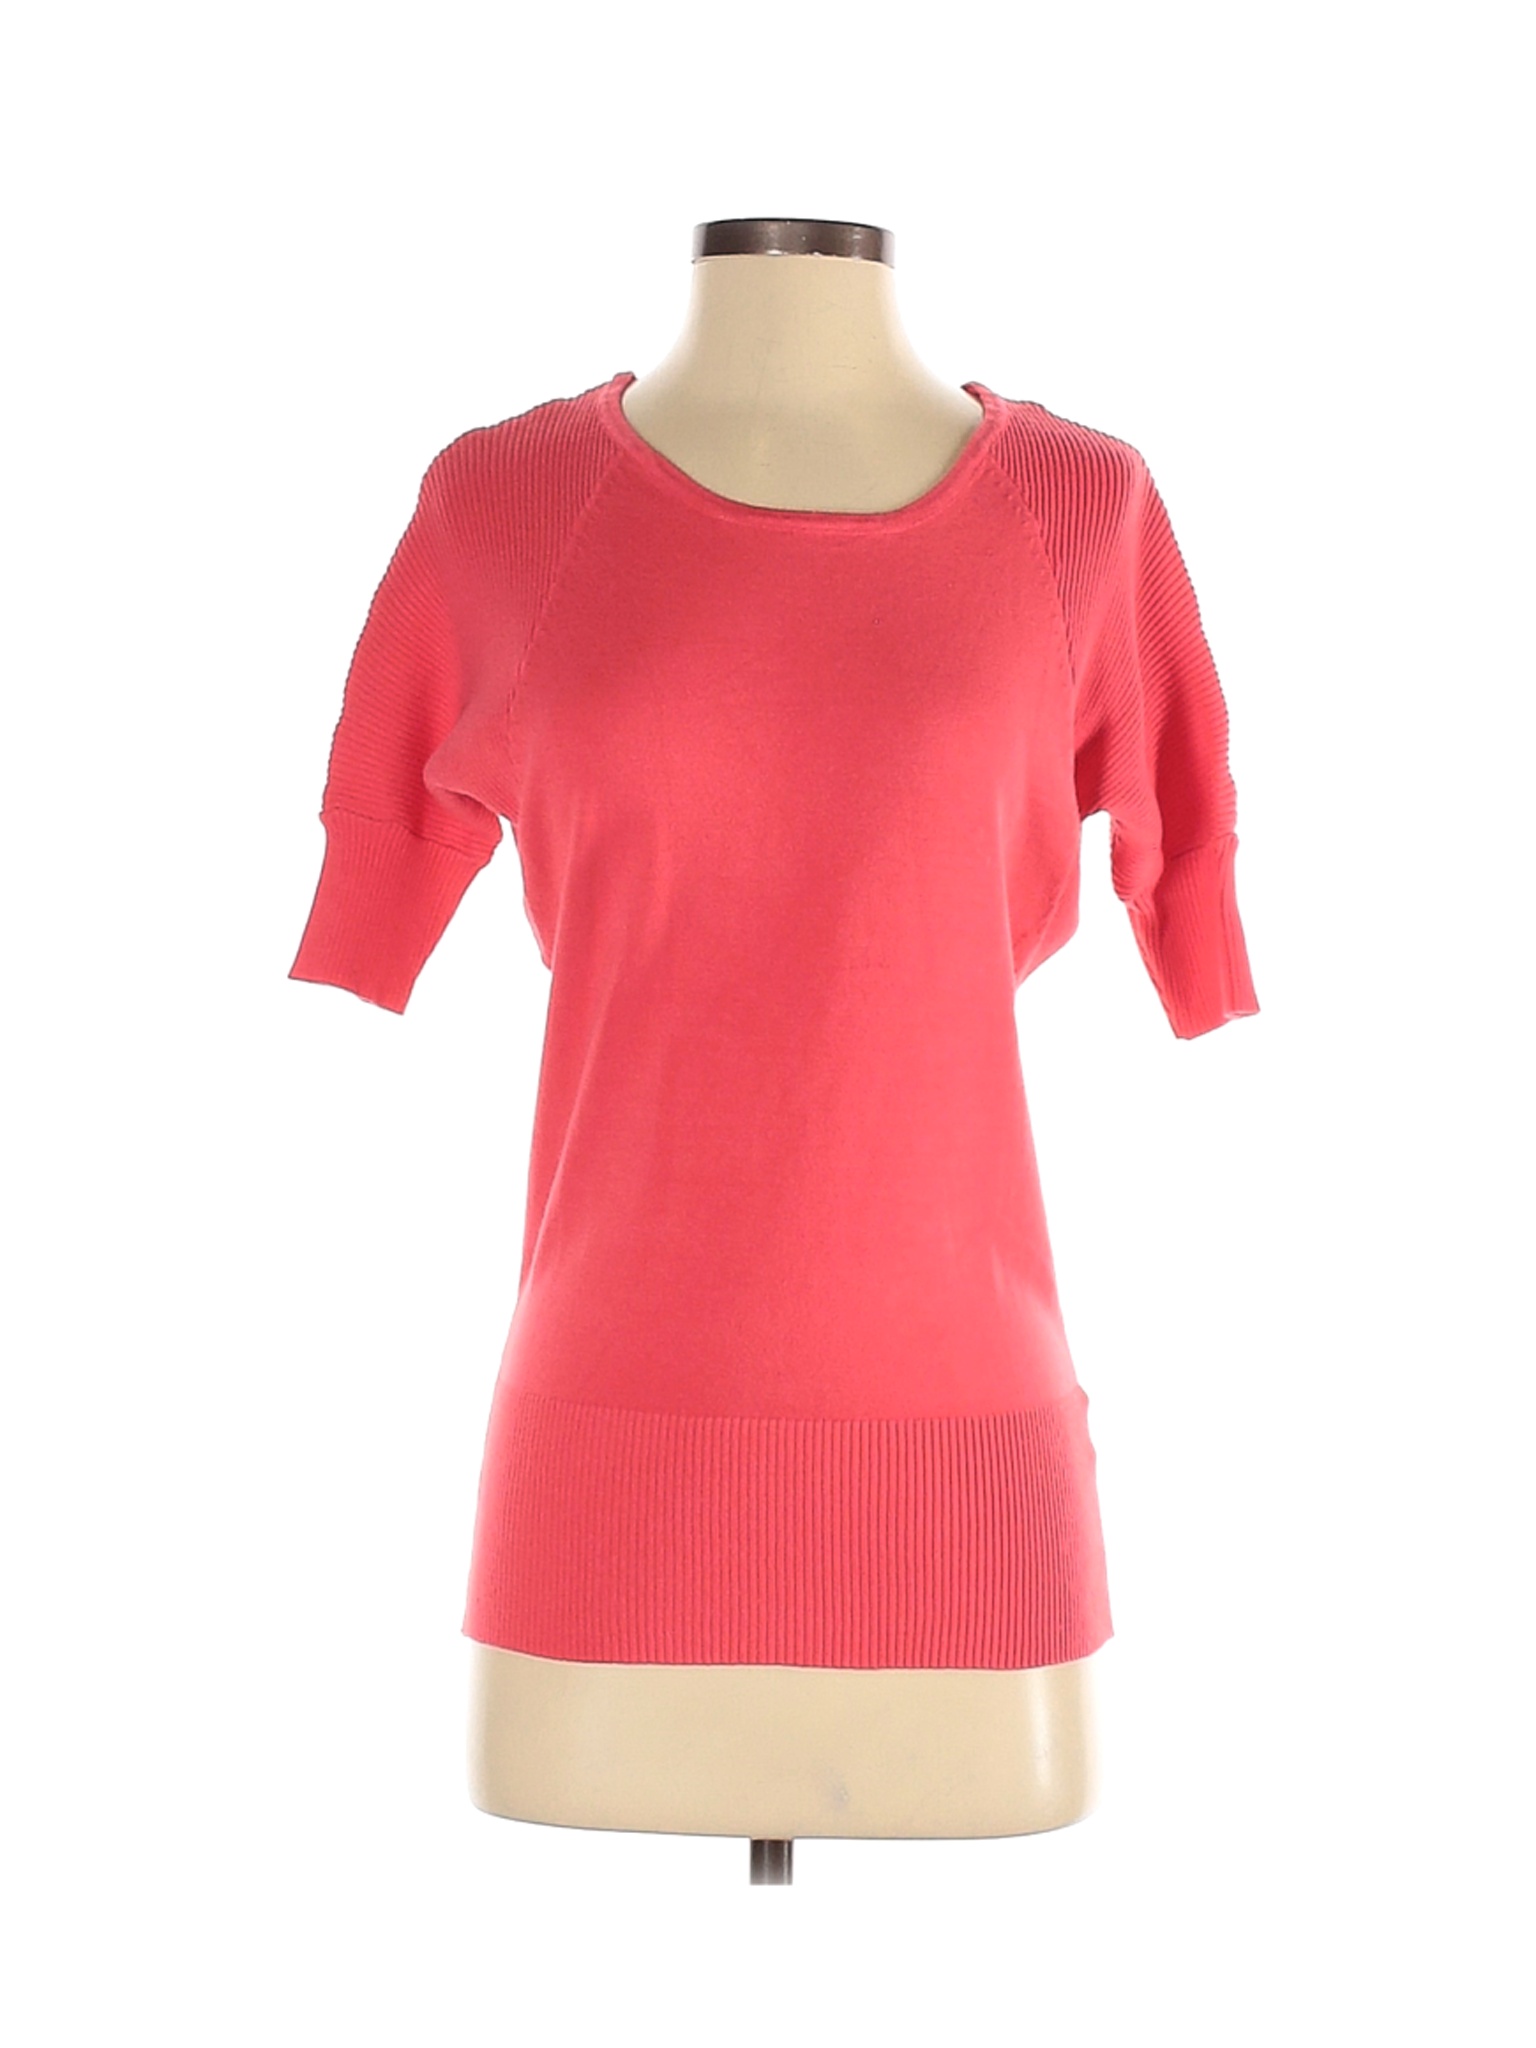 Maurices Women Pink Short Sleeve Top S | eBay